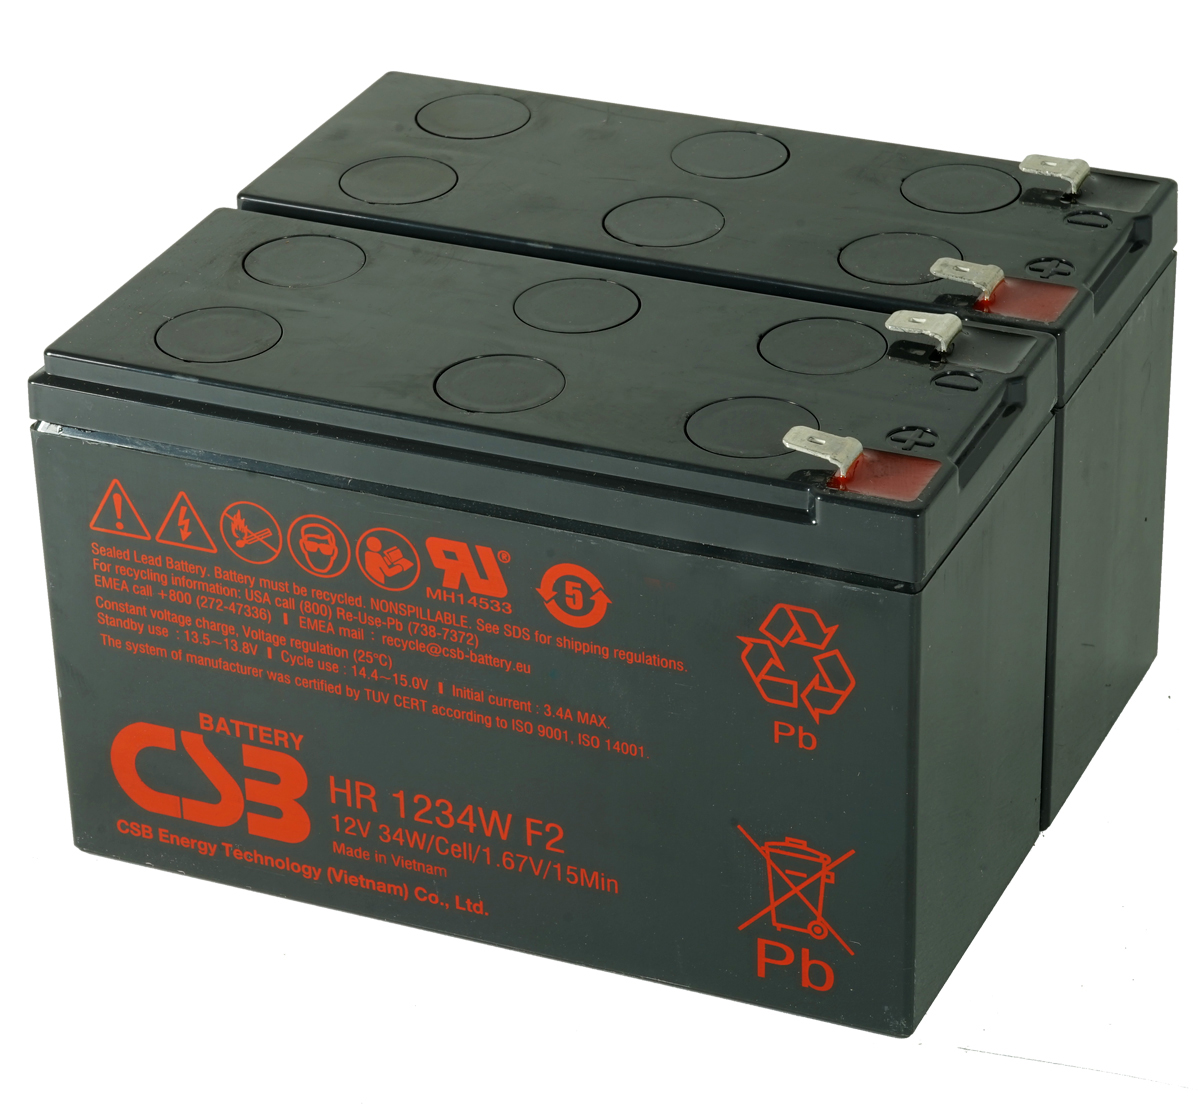 MDS166 UPS Battery Kit - Replaces APC RBC166